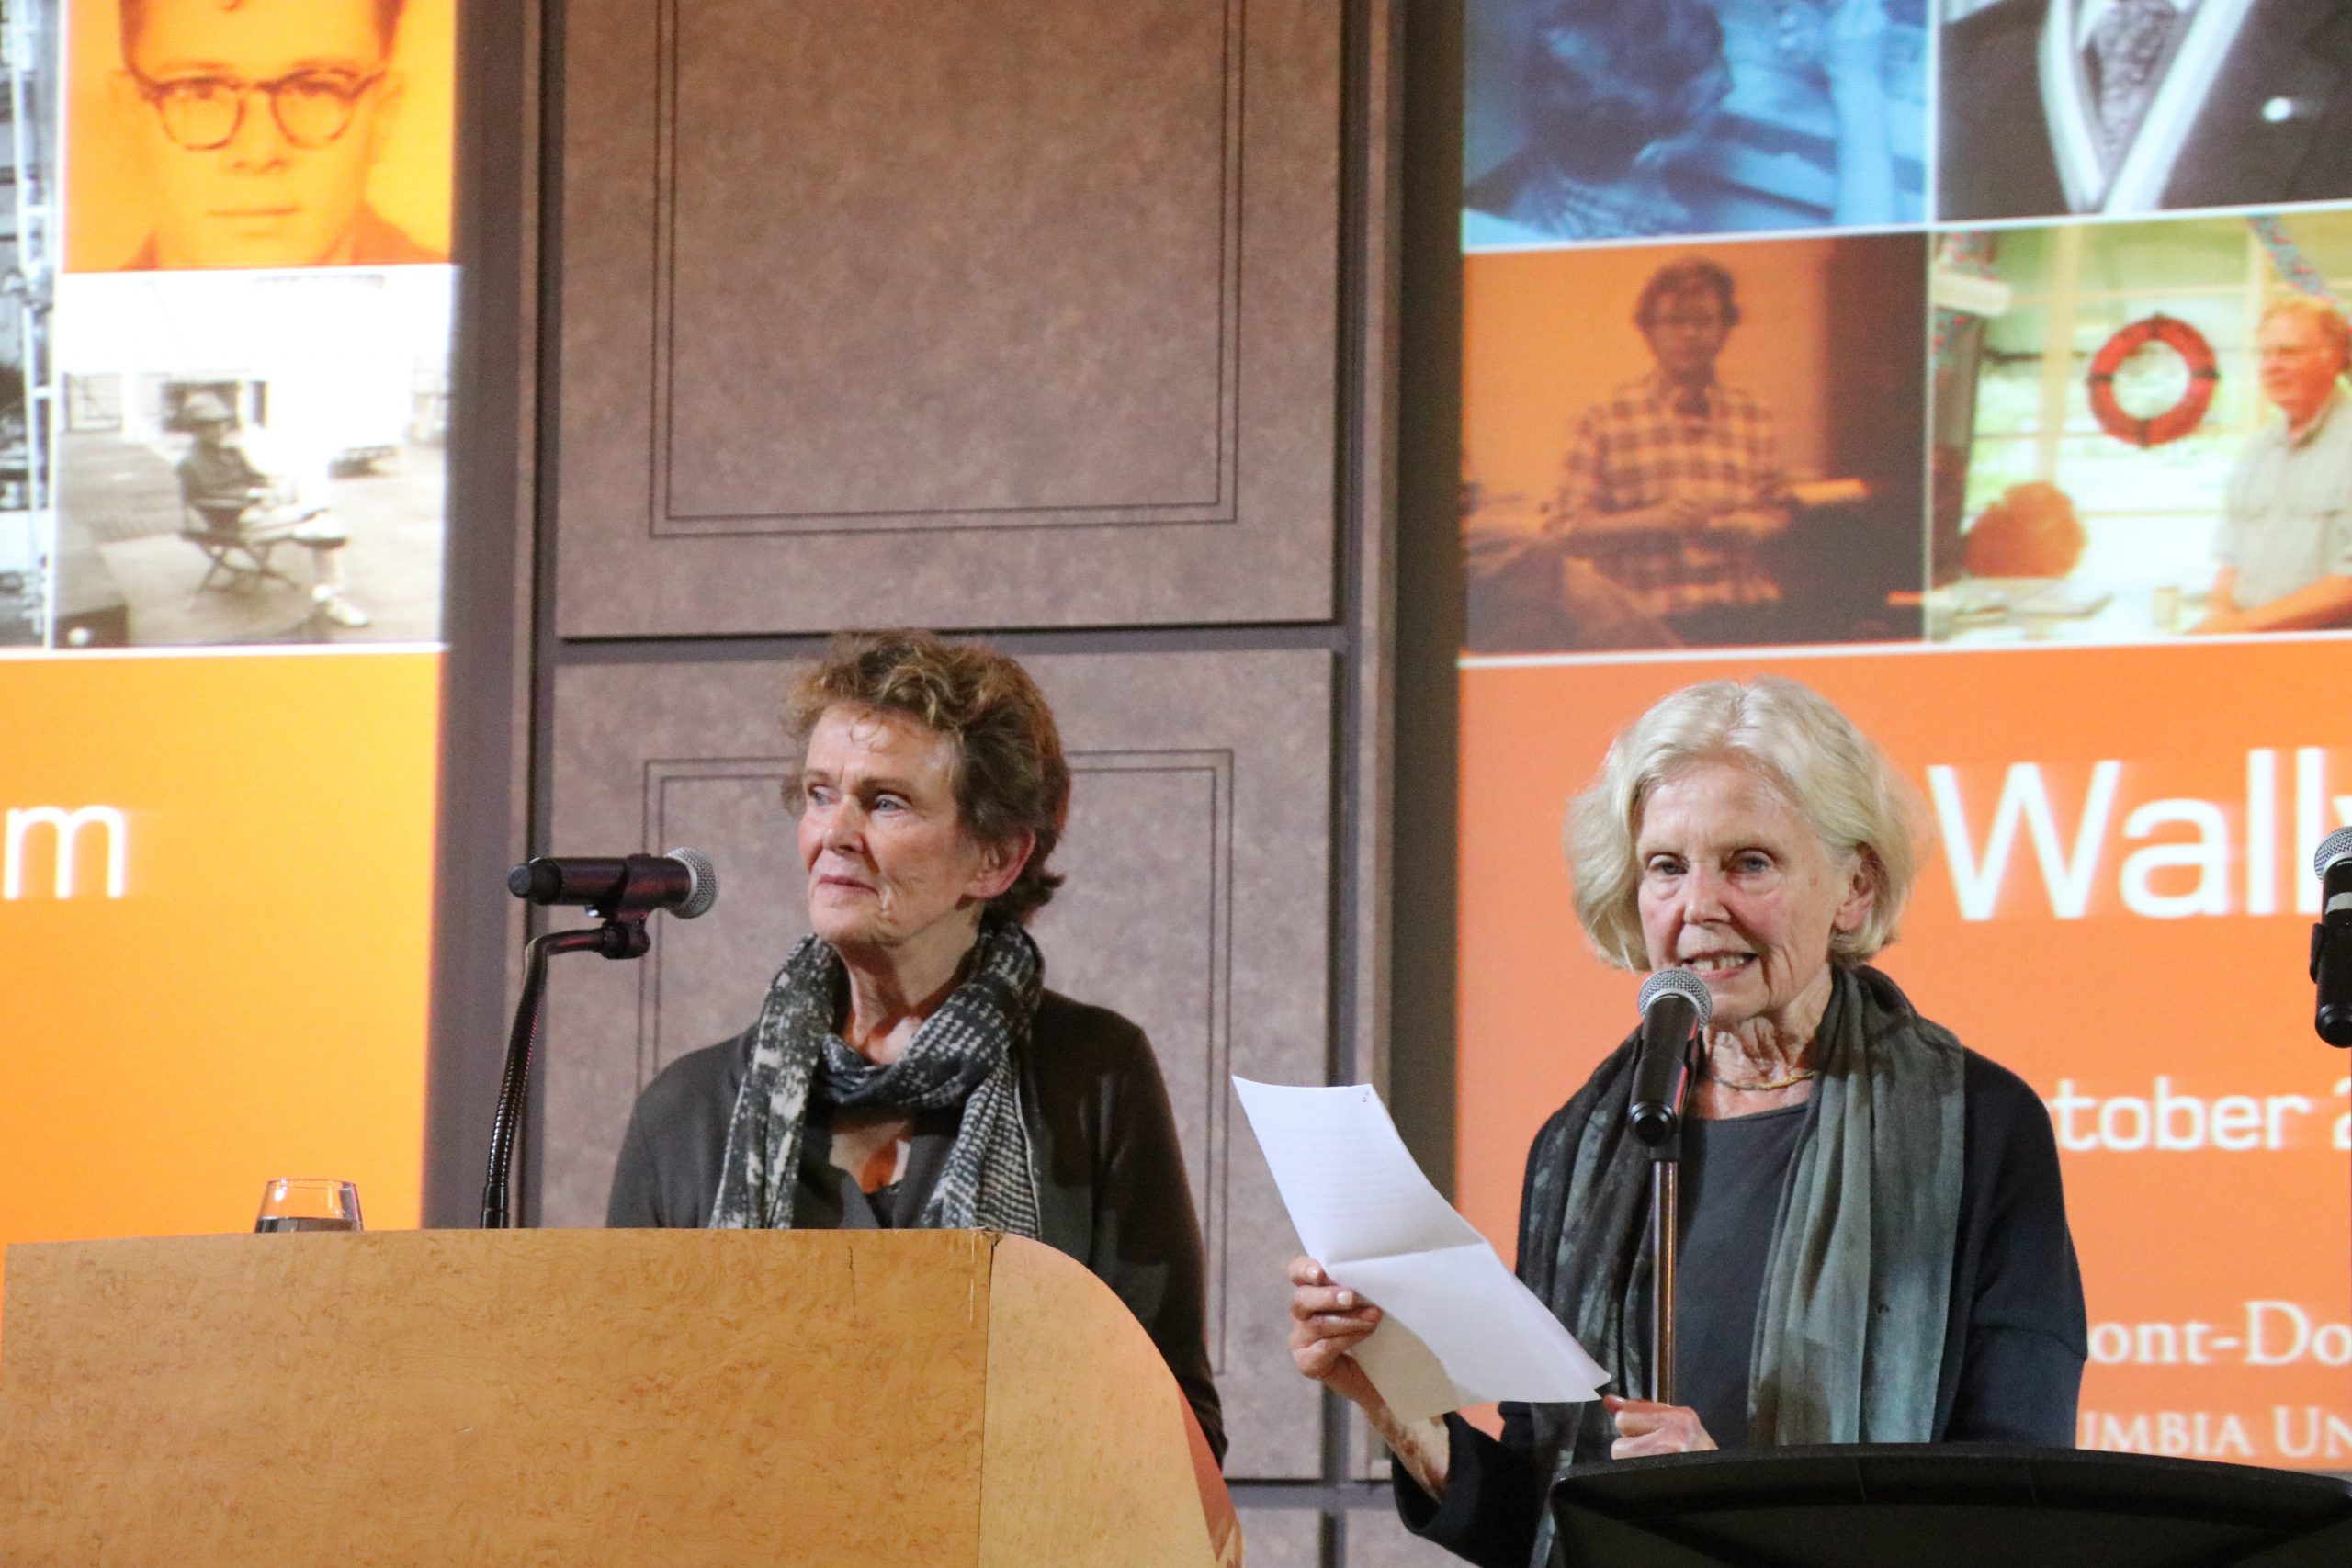 Two women giving a speech on a podium.